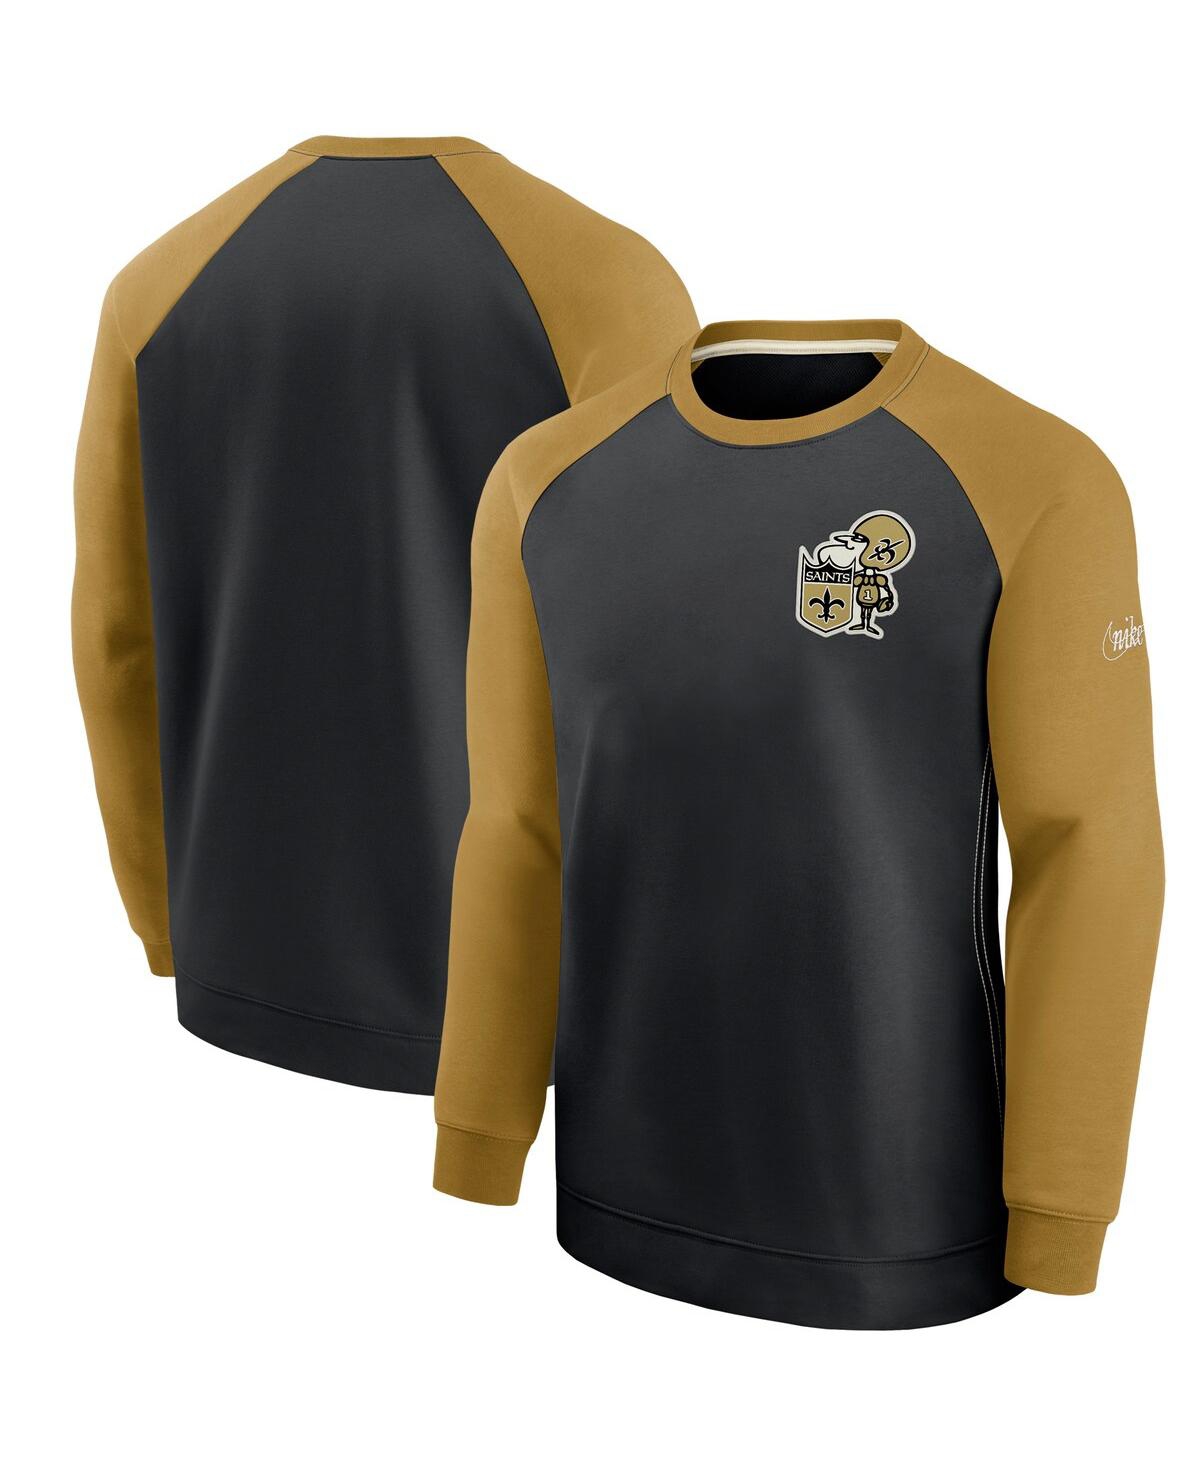 Men's Nike Black and Gold New Orleans Saints Historic Raglan Performance Pullover Sweater - Black, Gold